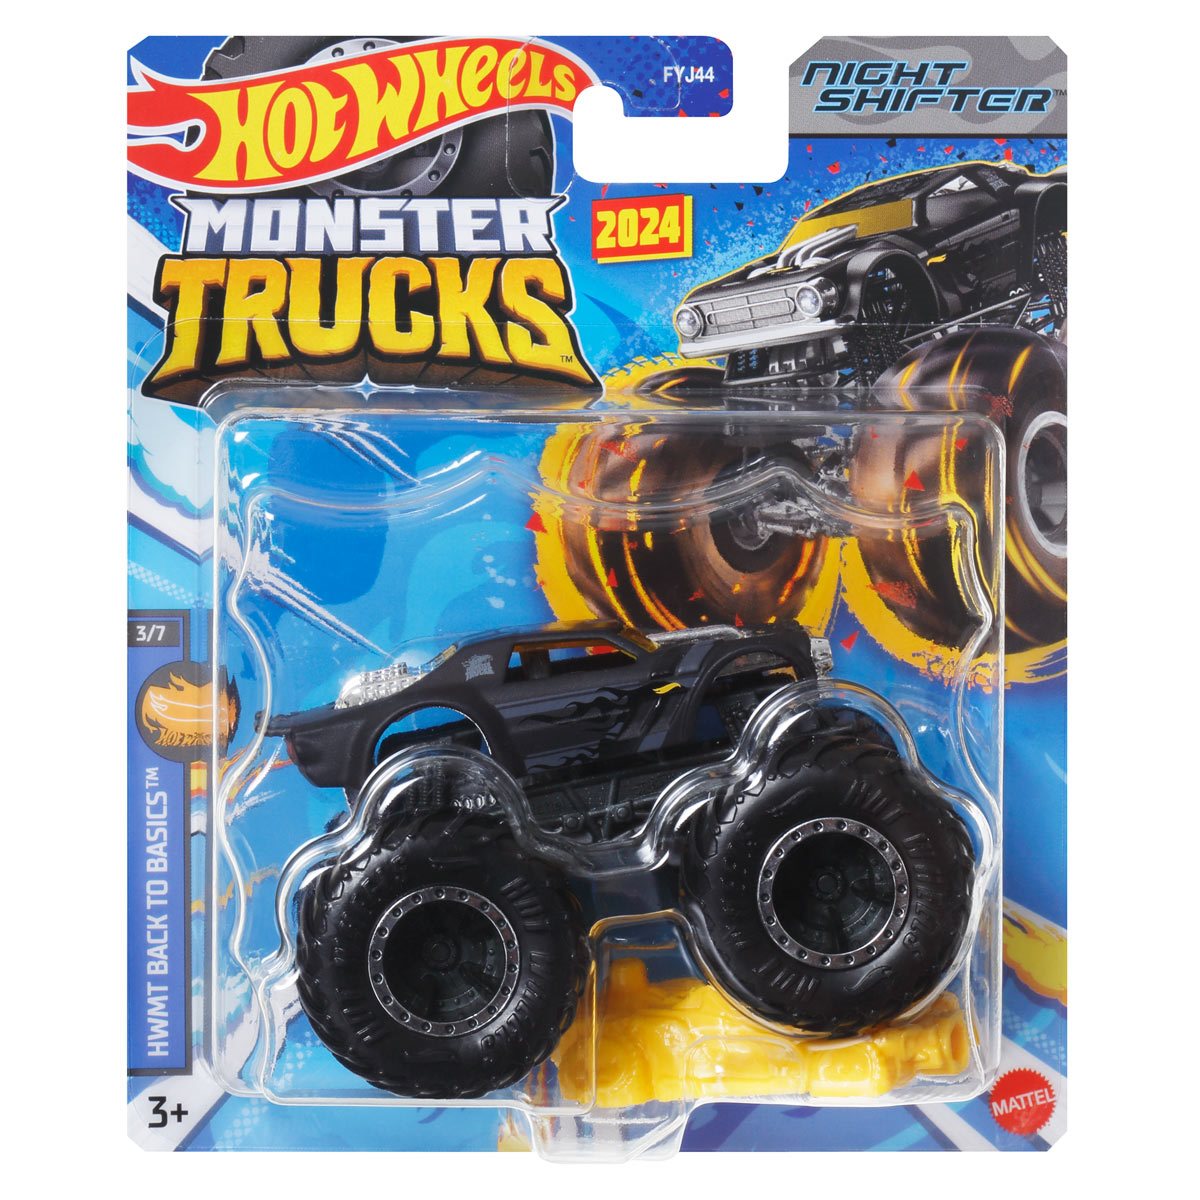 Mattel-Hot Wheels Monster Trucks - 2024-HTM40-Night Shifter-Legacy Toys